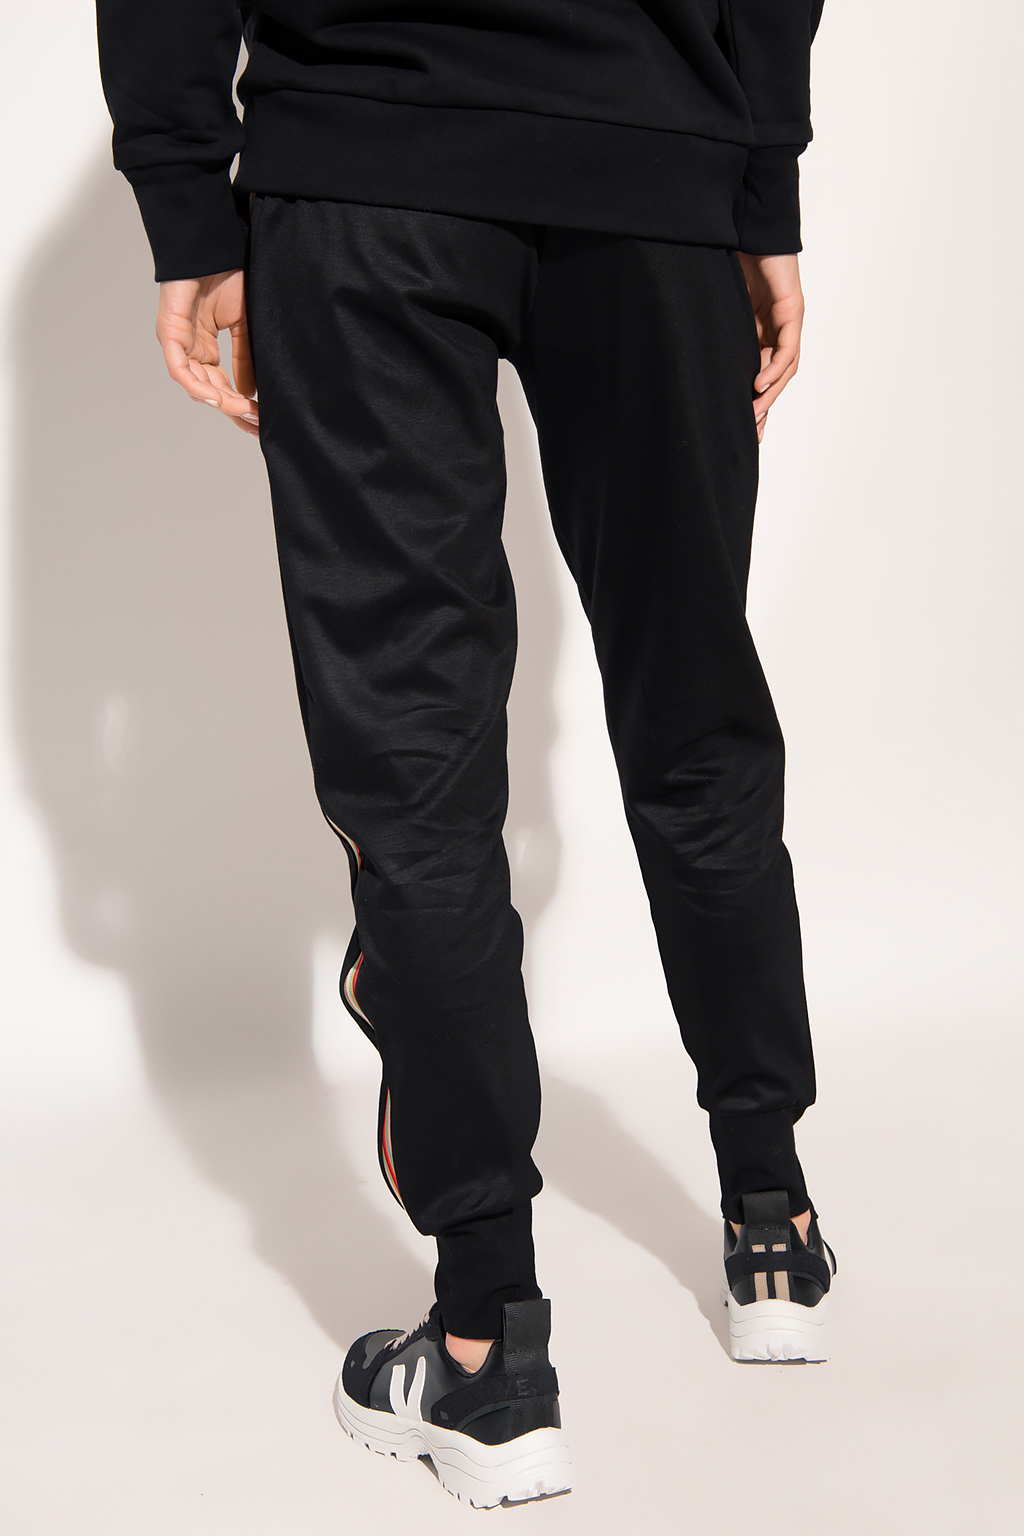 Black Sweatpants with side stripes PS Paul Smith - Vitkac GB